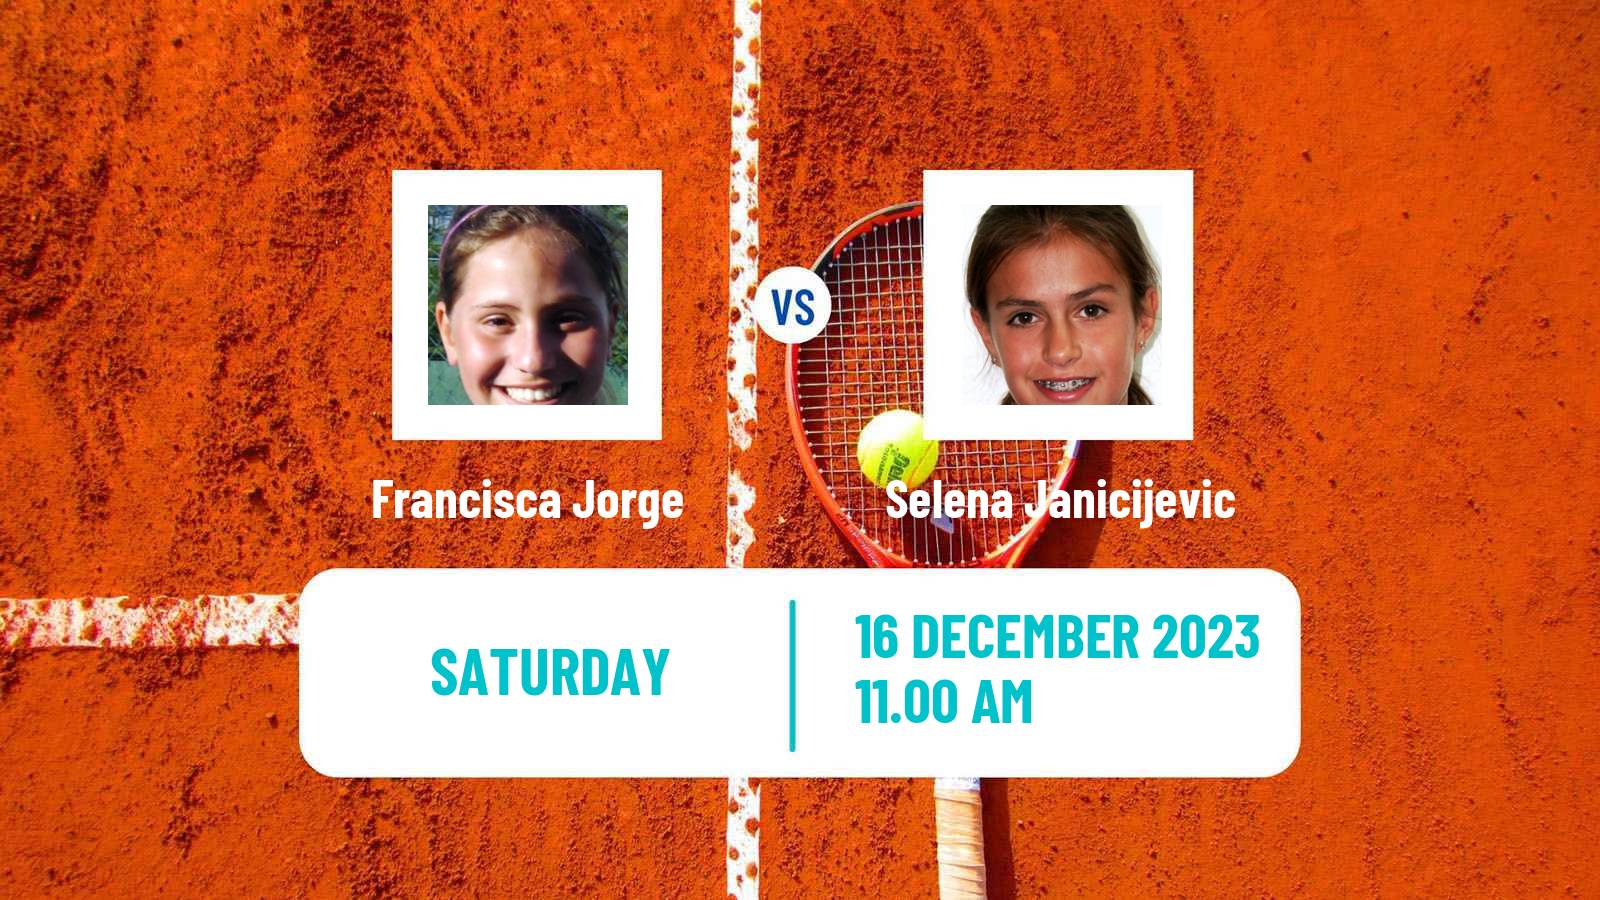 Tennis ITF W60 Vacaria Women Francisca Jorge - Selena Janicijevic